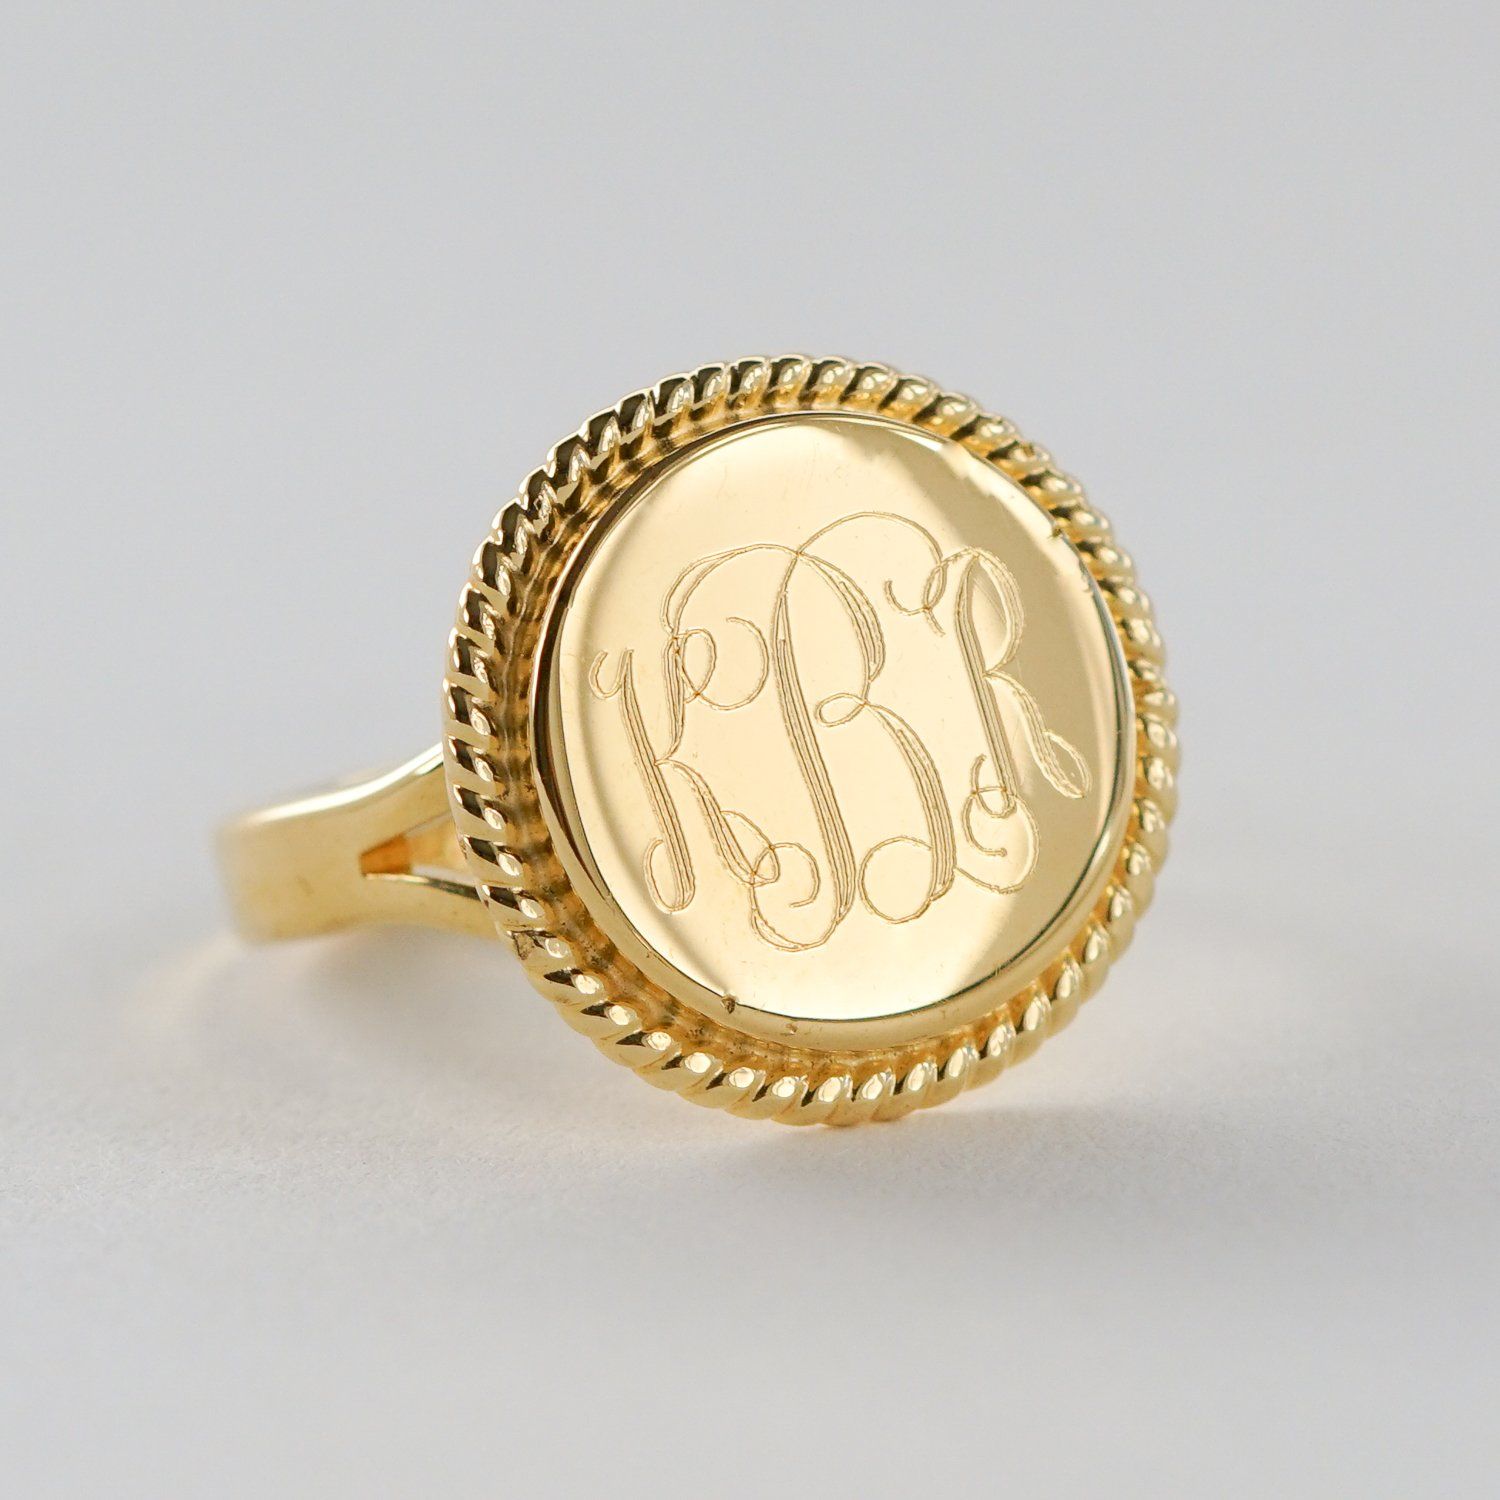 Gold Nautical Monogram Ring with Rope Edge